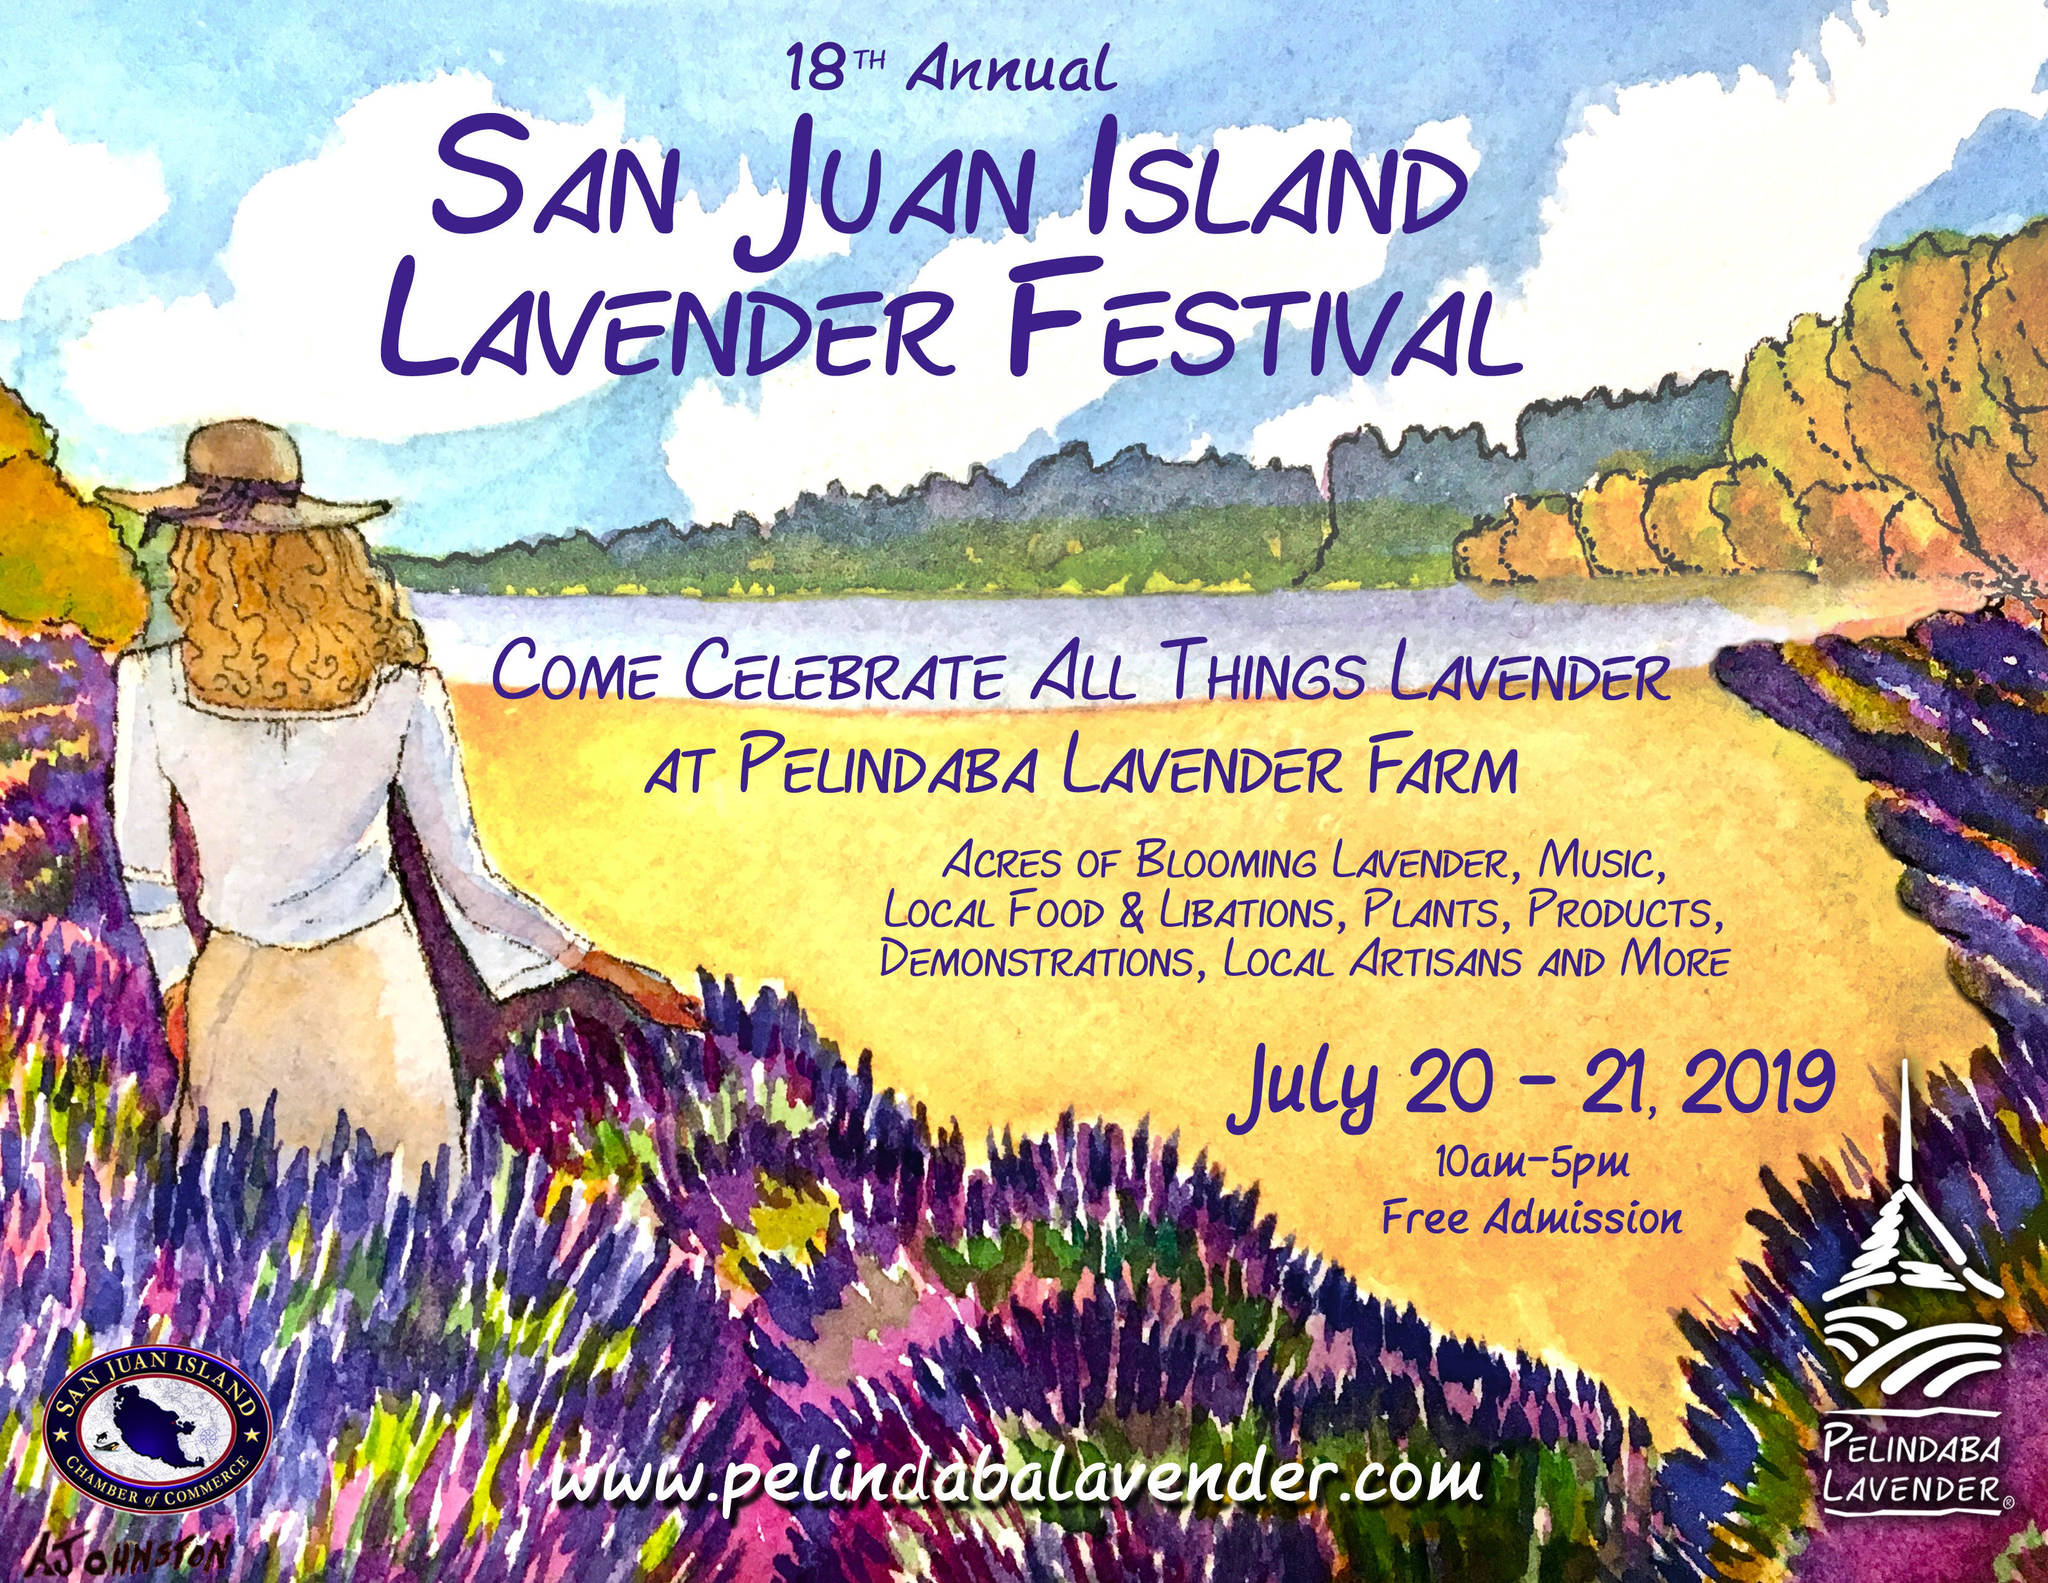 Volunteer at the lavender festival